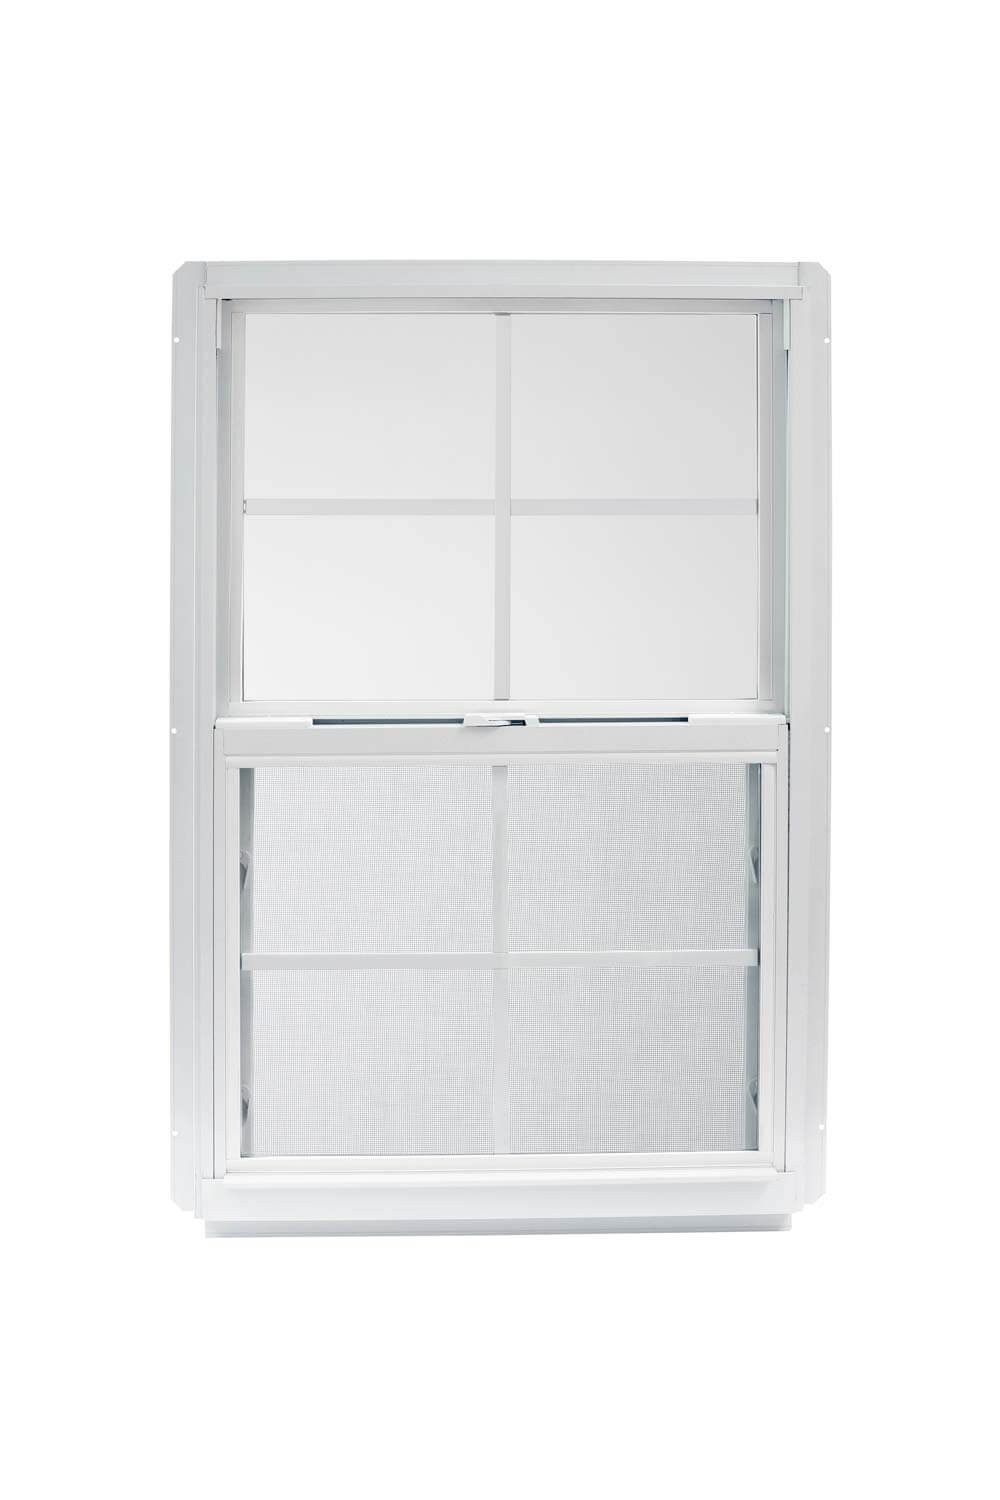 2' x 5' Bronze Aluminum Insulated Window (4/4 Window Pane Arrangement) Series 96